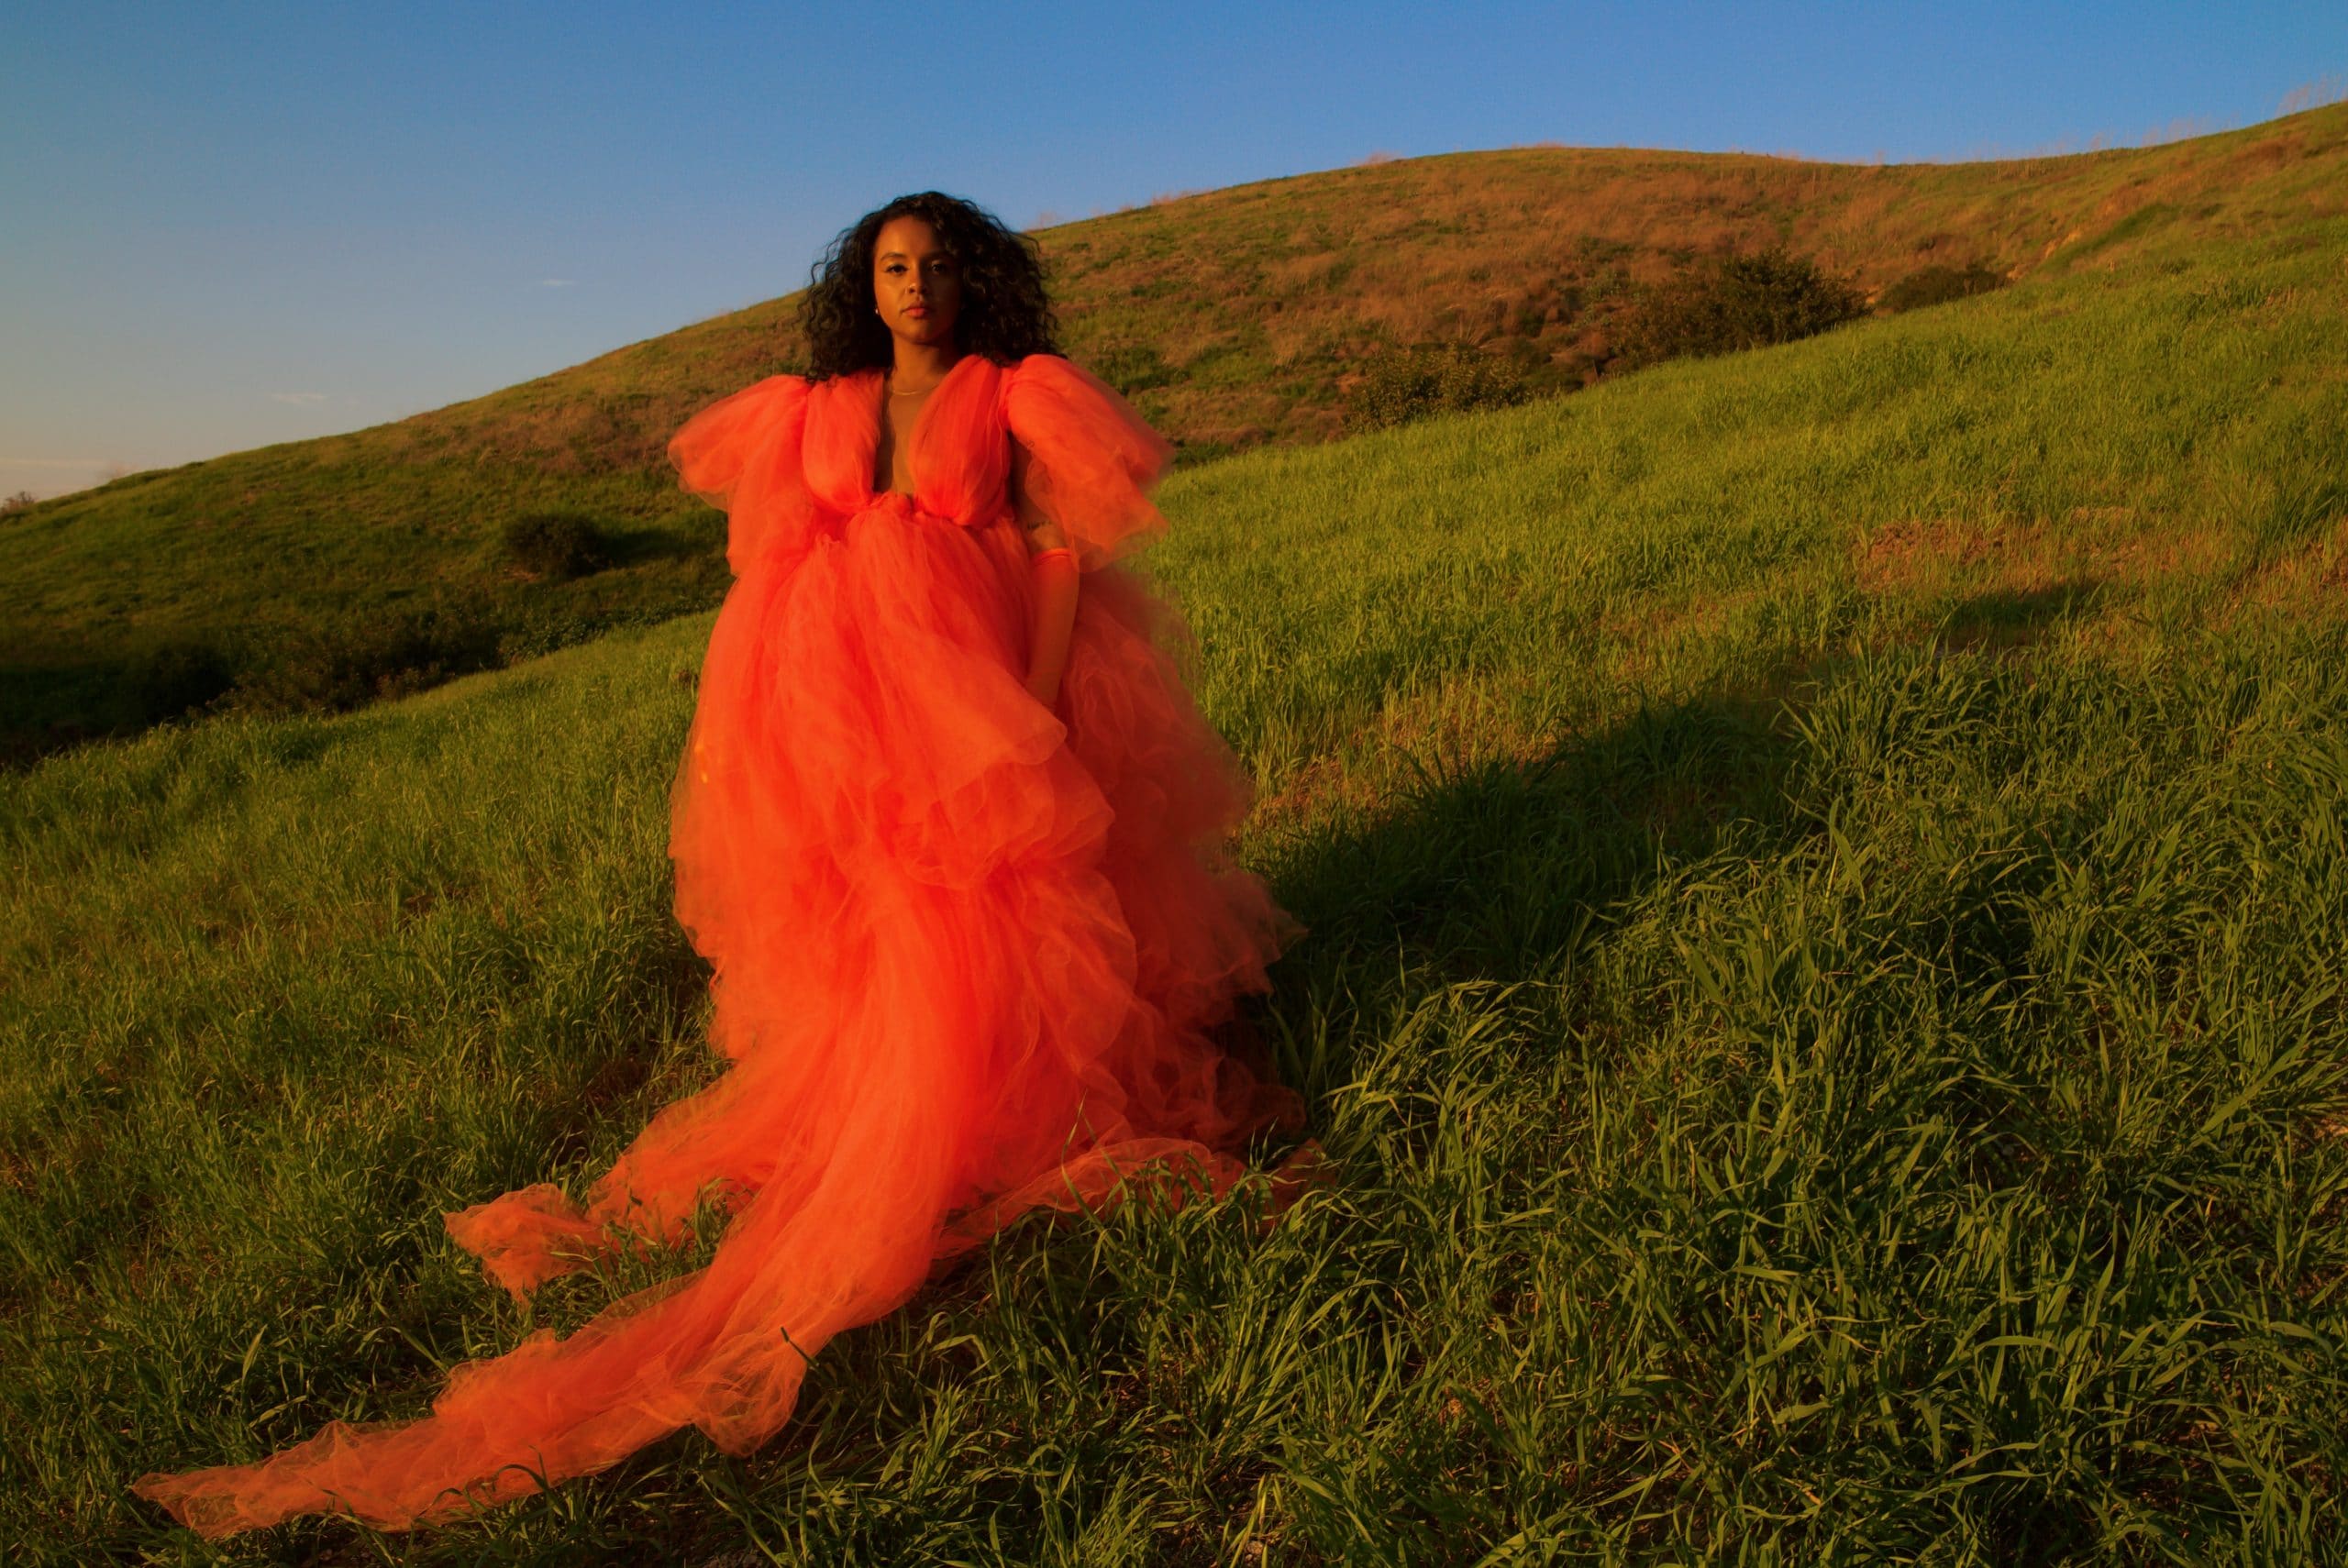 Latasha standing in a field wearing an orange dress